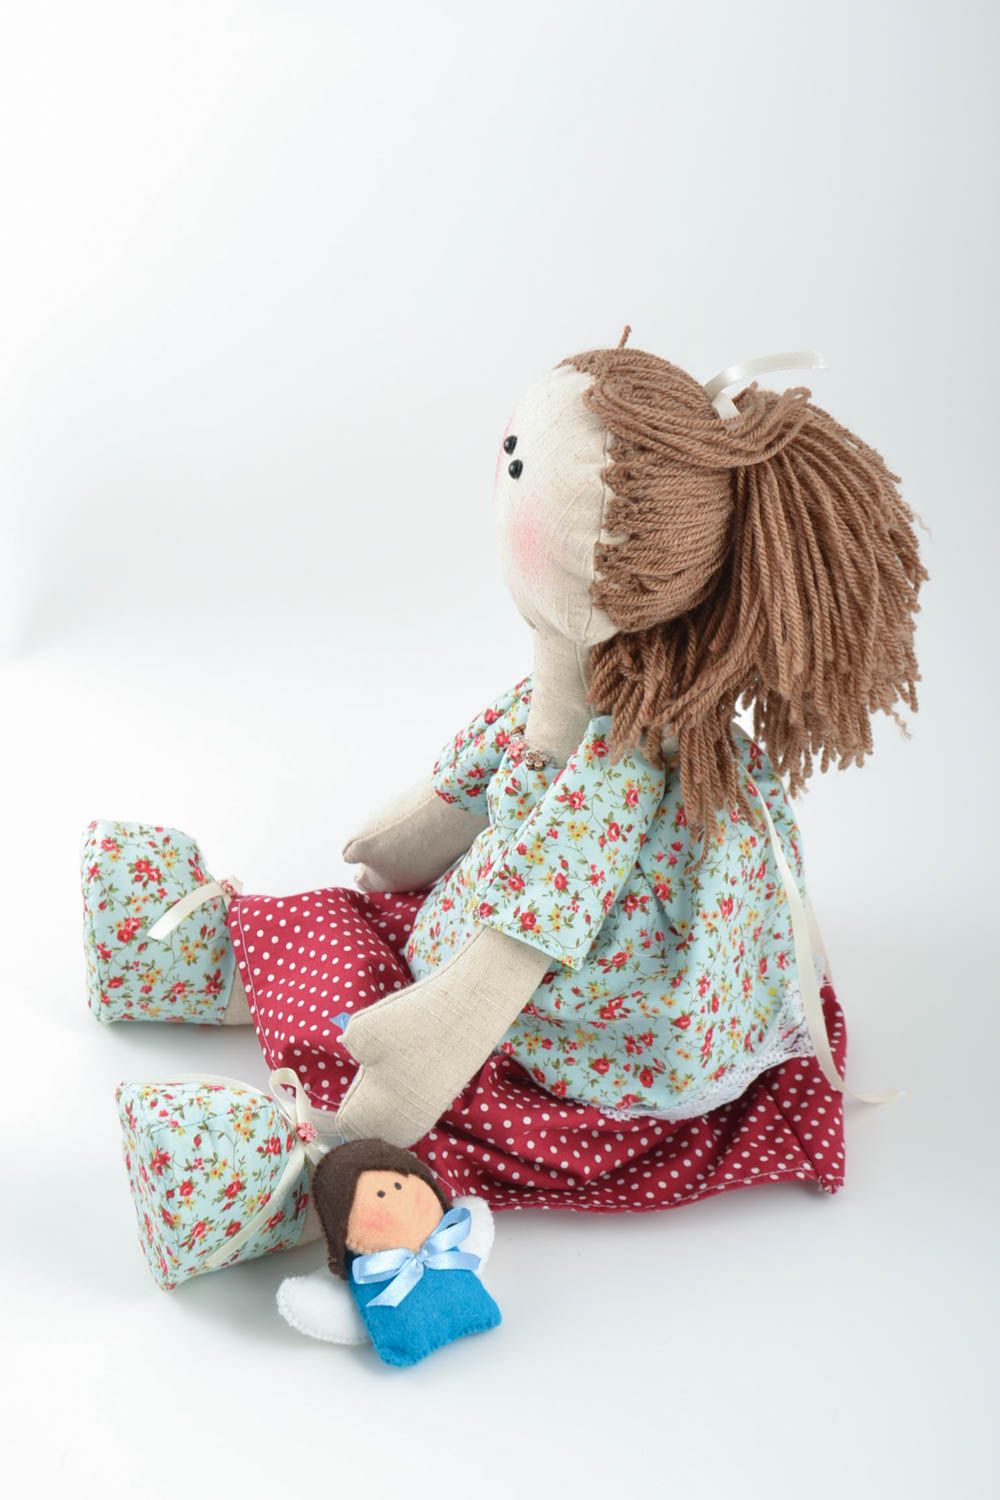 Unusual beautiful handmade fabric soft doll for children and interior decor photo 2